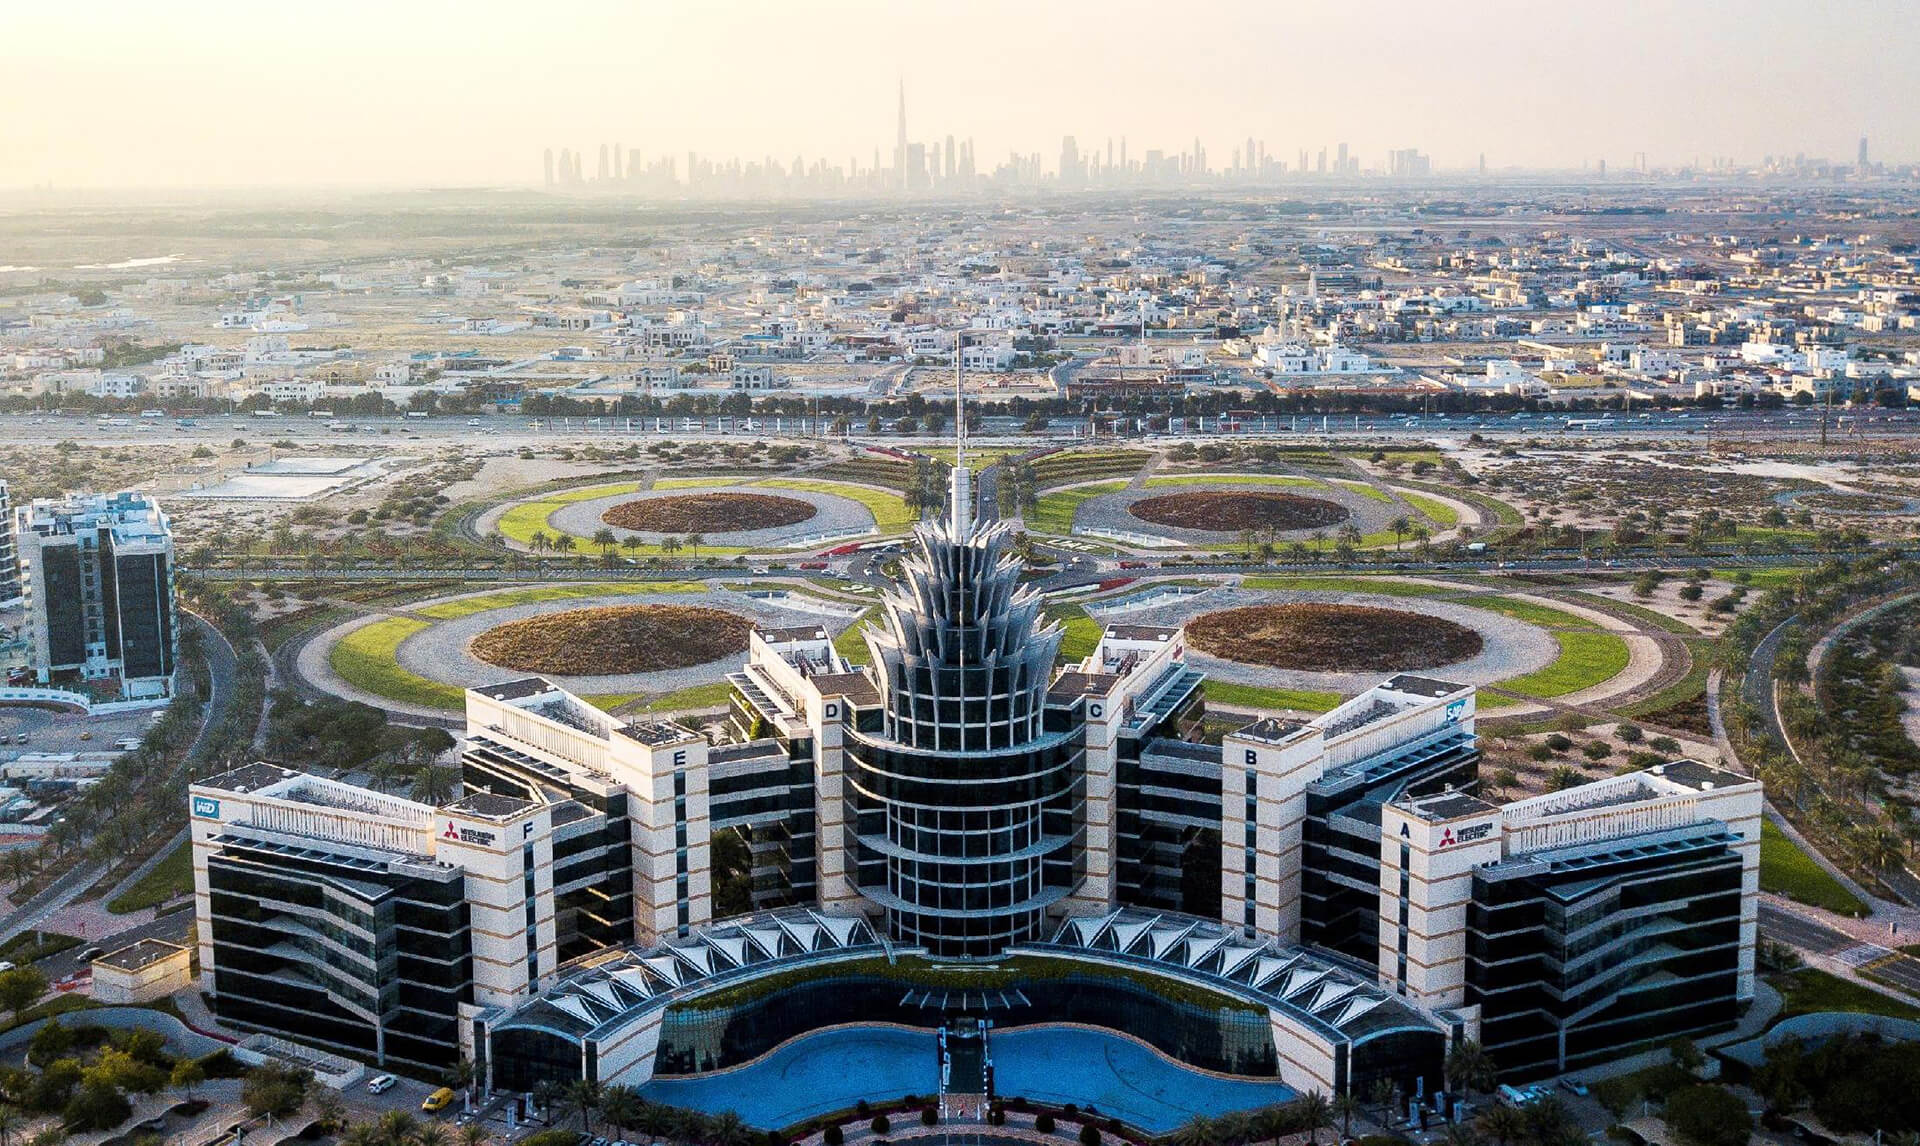 Dubai Silicon Oasis is a globally recognized free zone